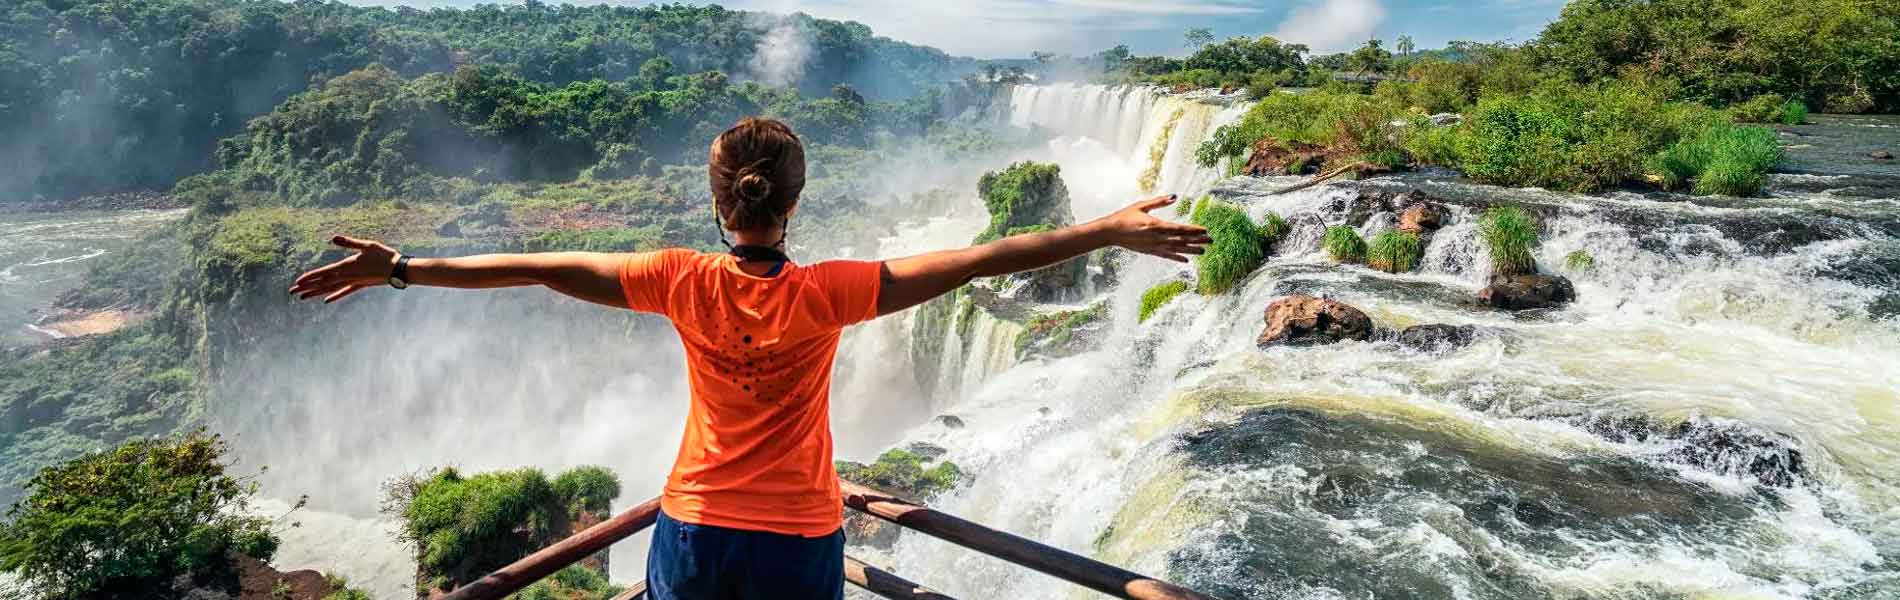 Iguazu falls Argentina Tours